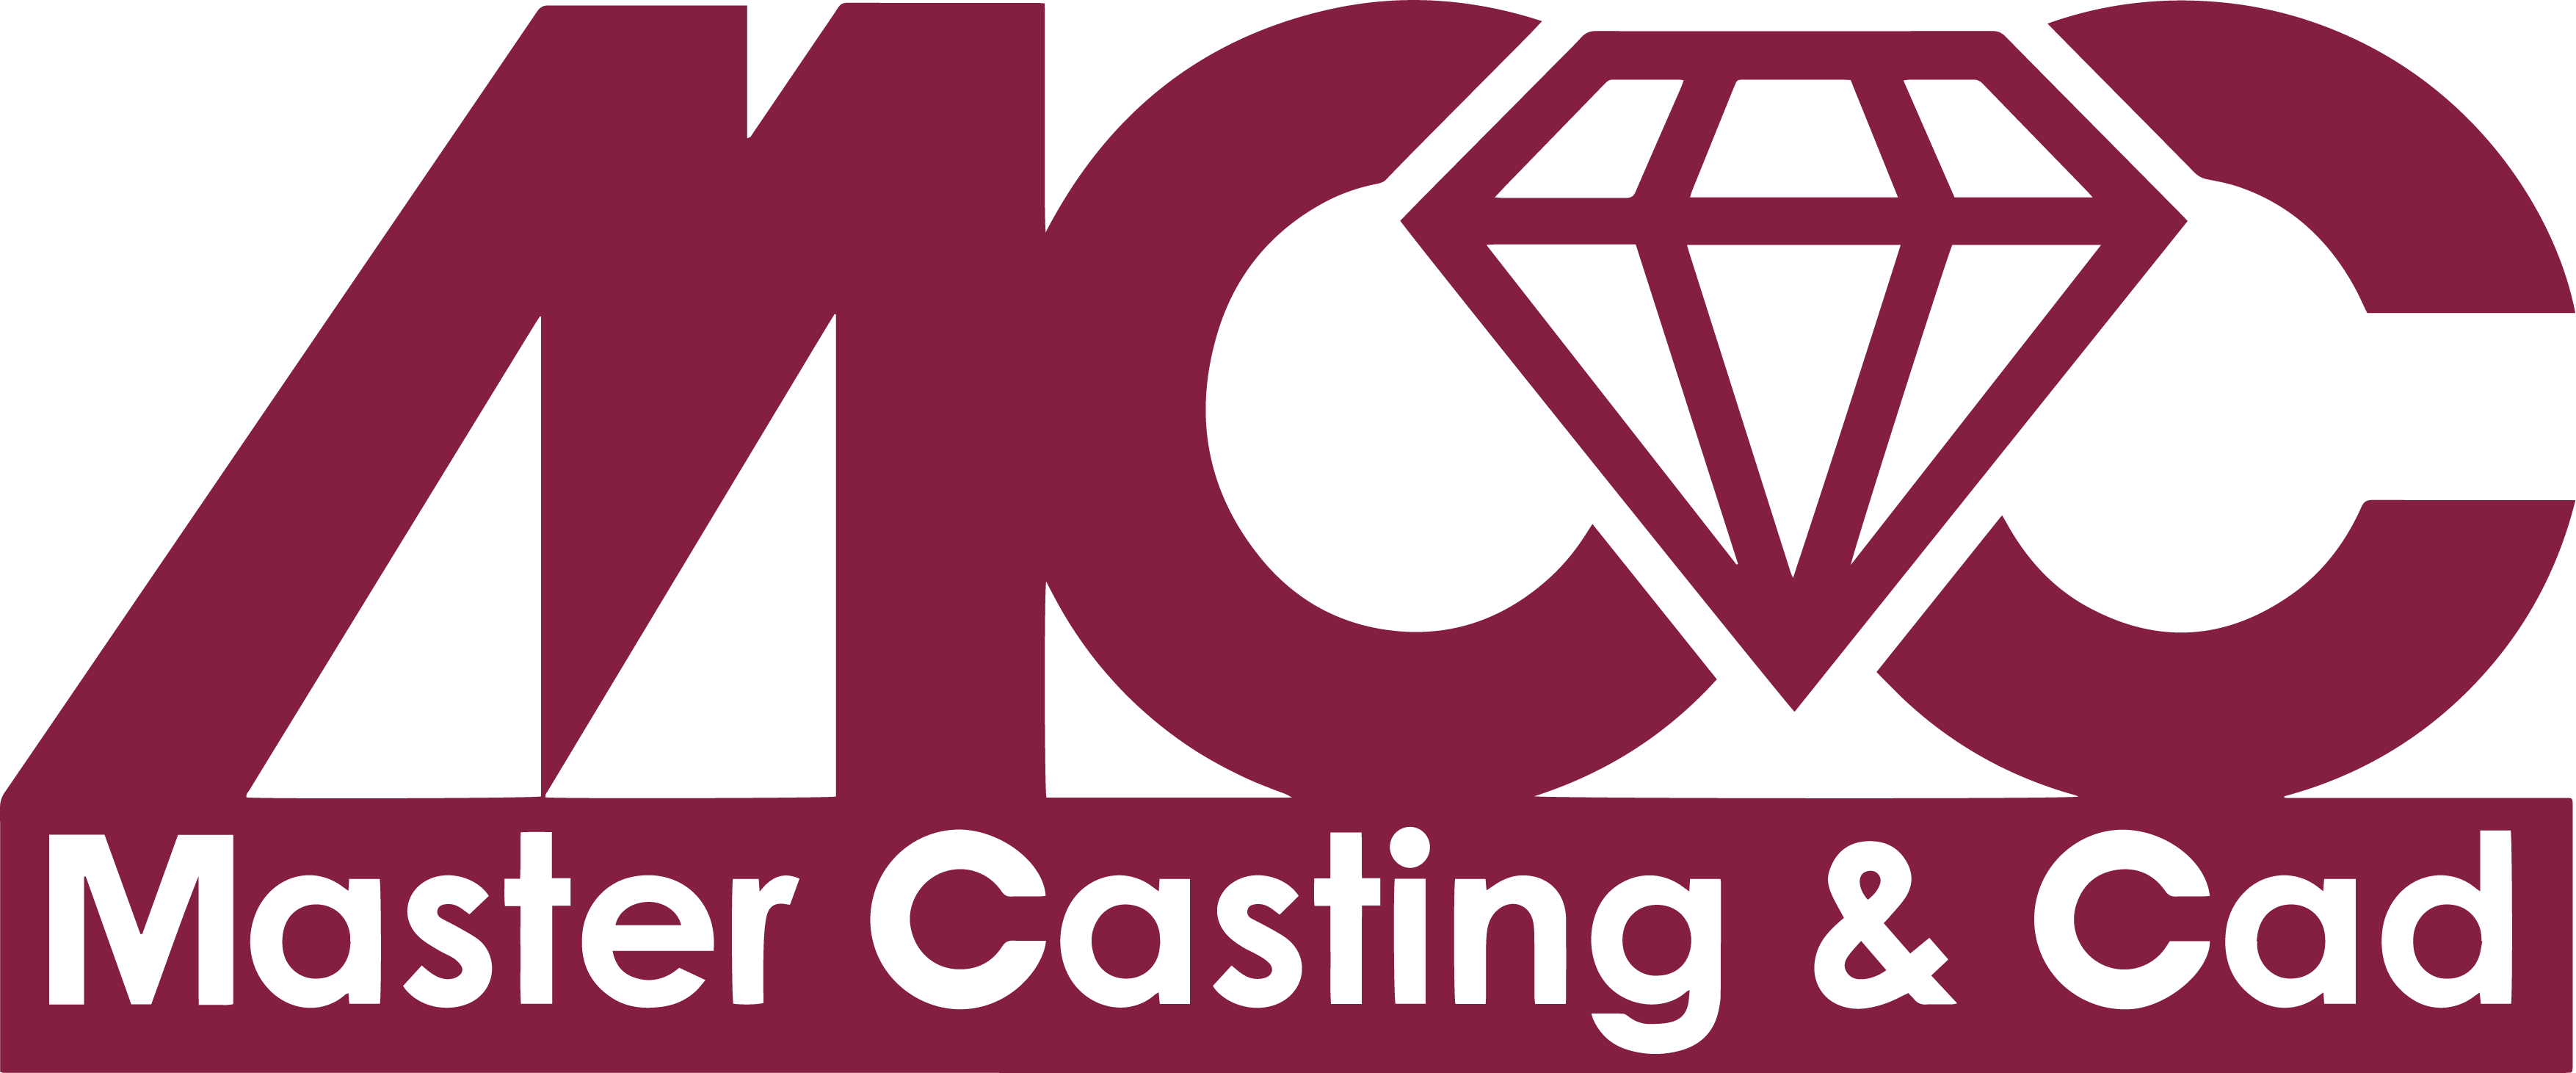 master casting & cad_logo high res